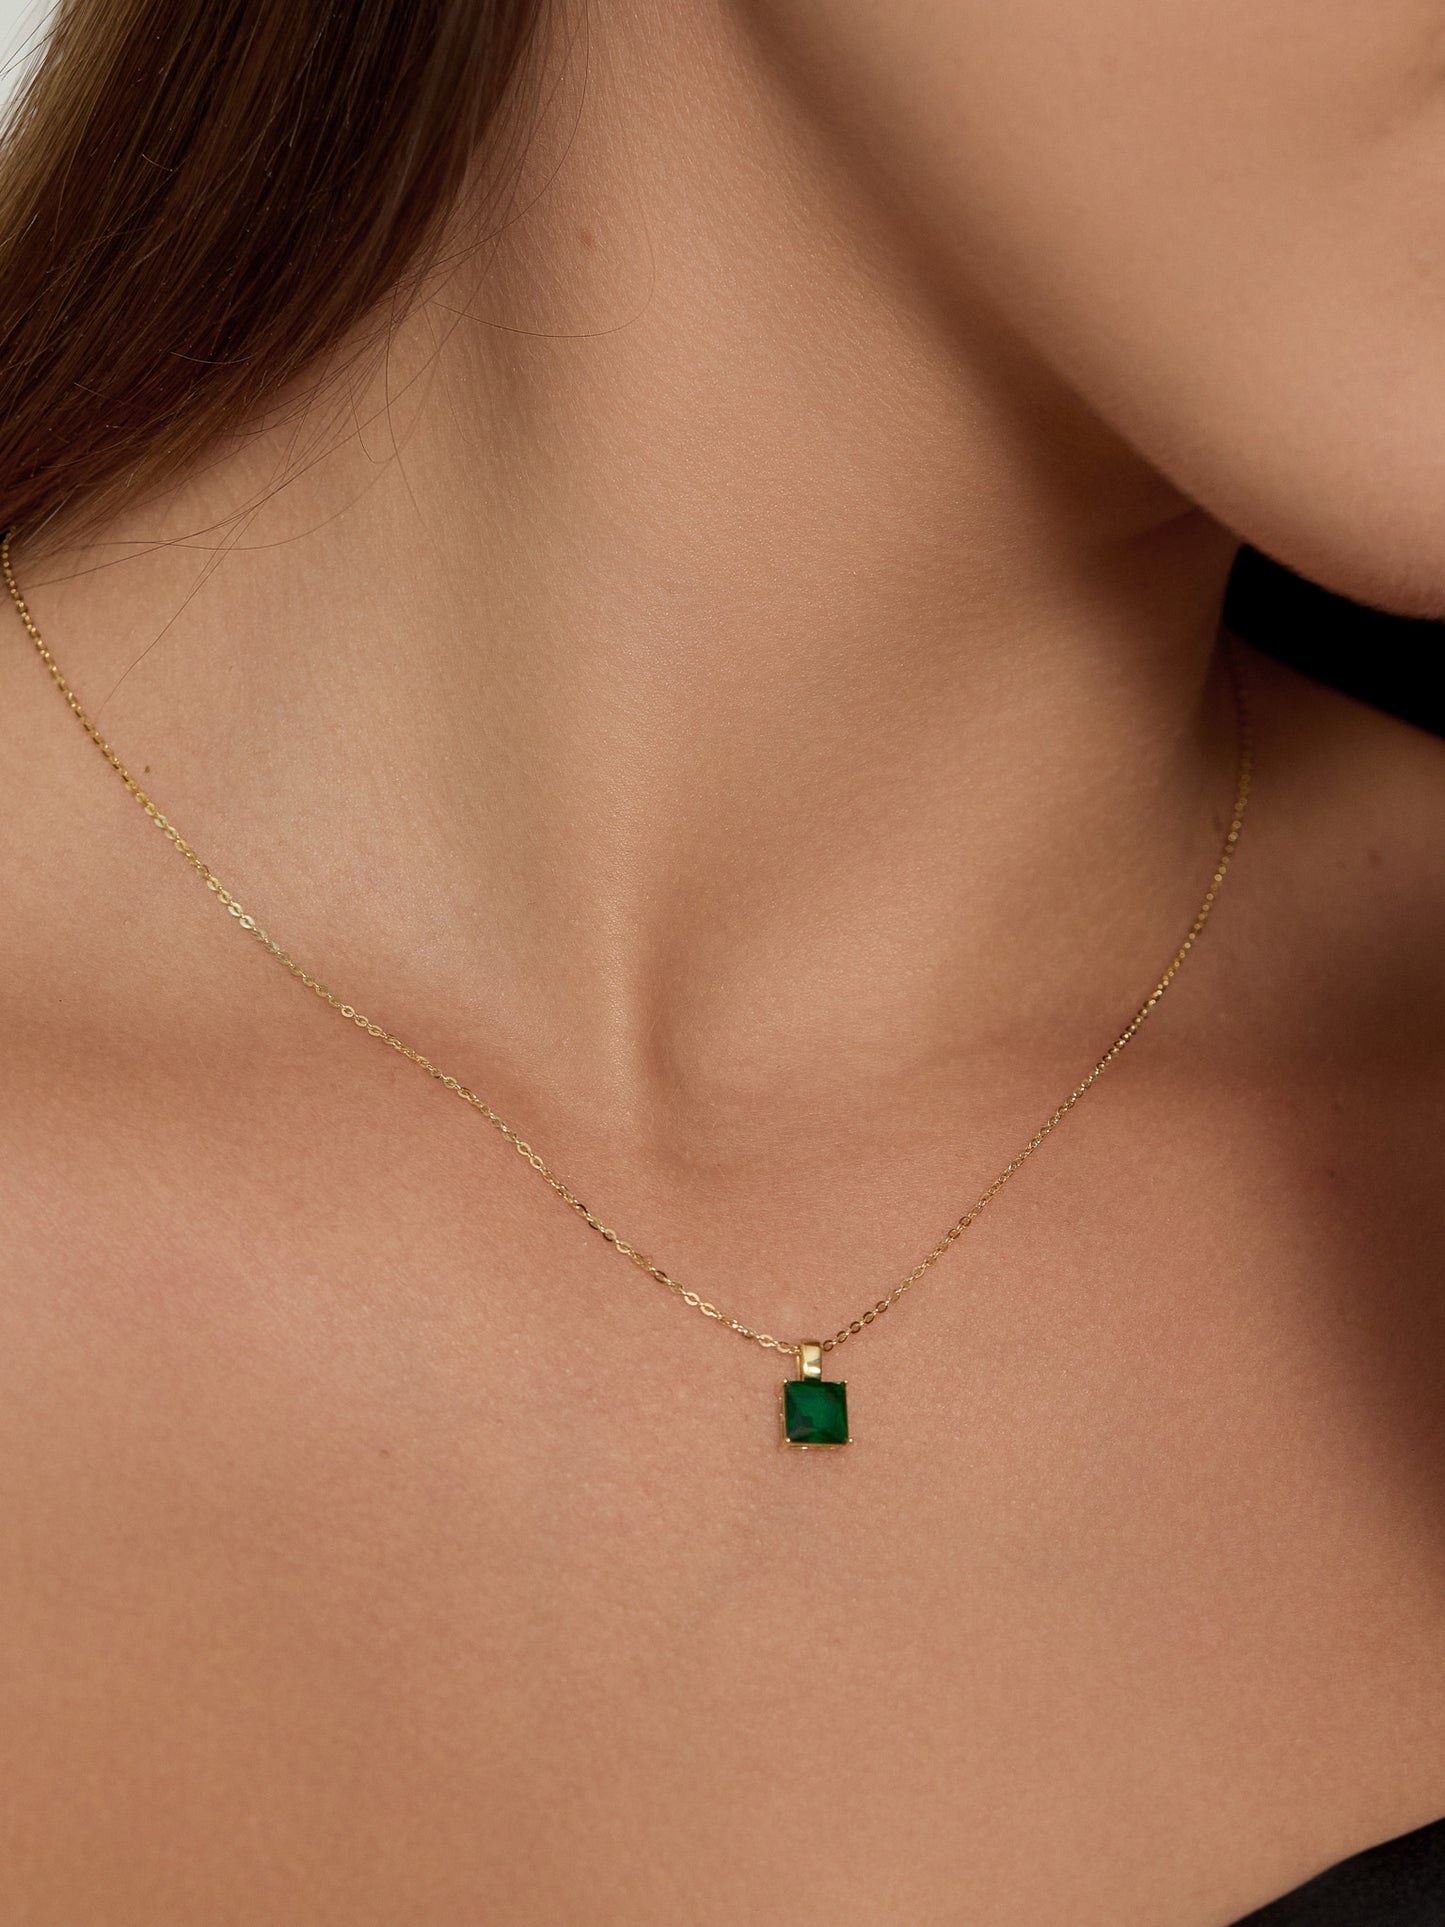 Emerald Cube Necklace